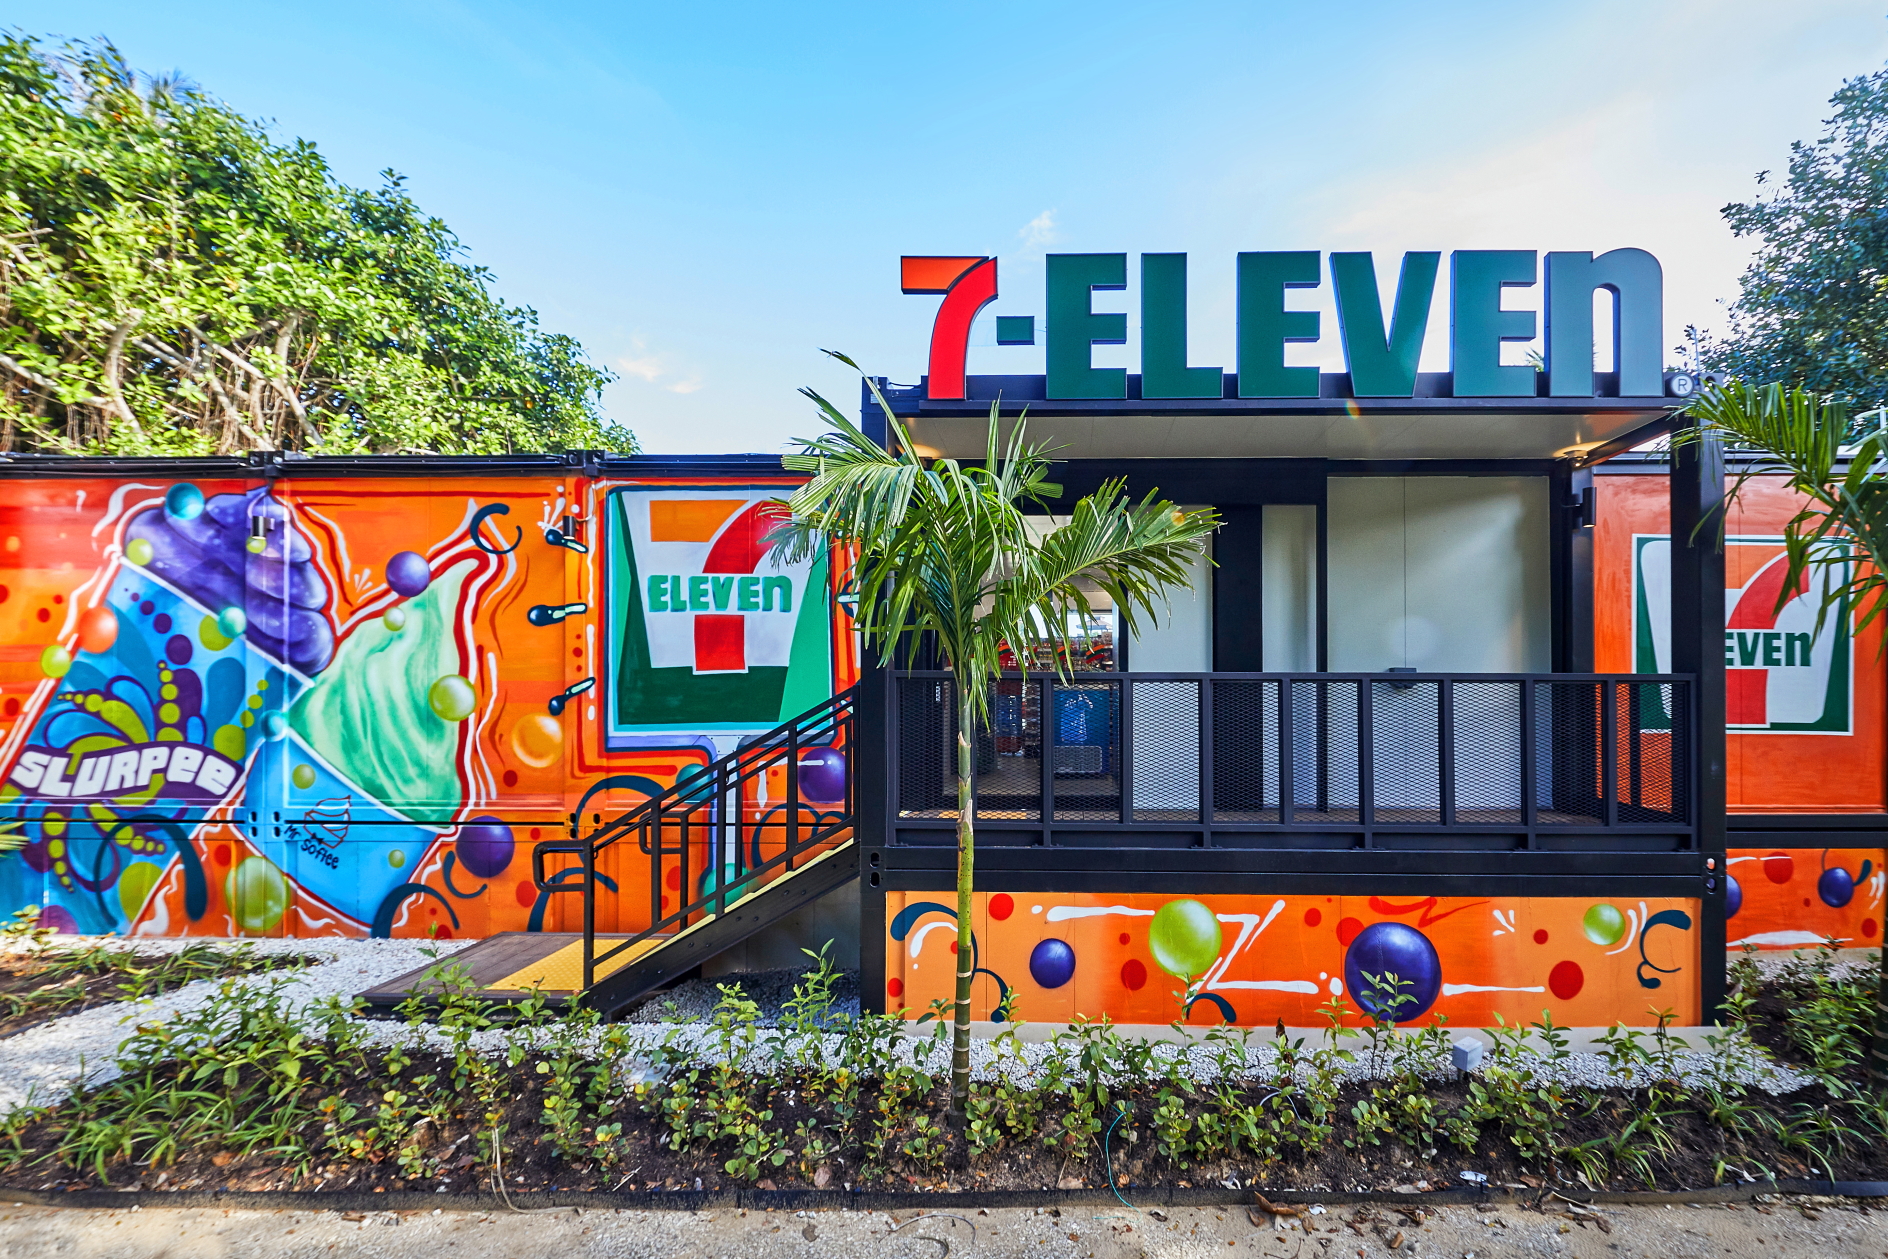 7-Eleven Palawan Sentosa, Singapore. Click to enlarge.